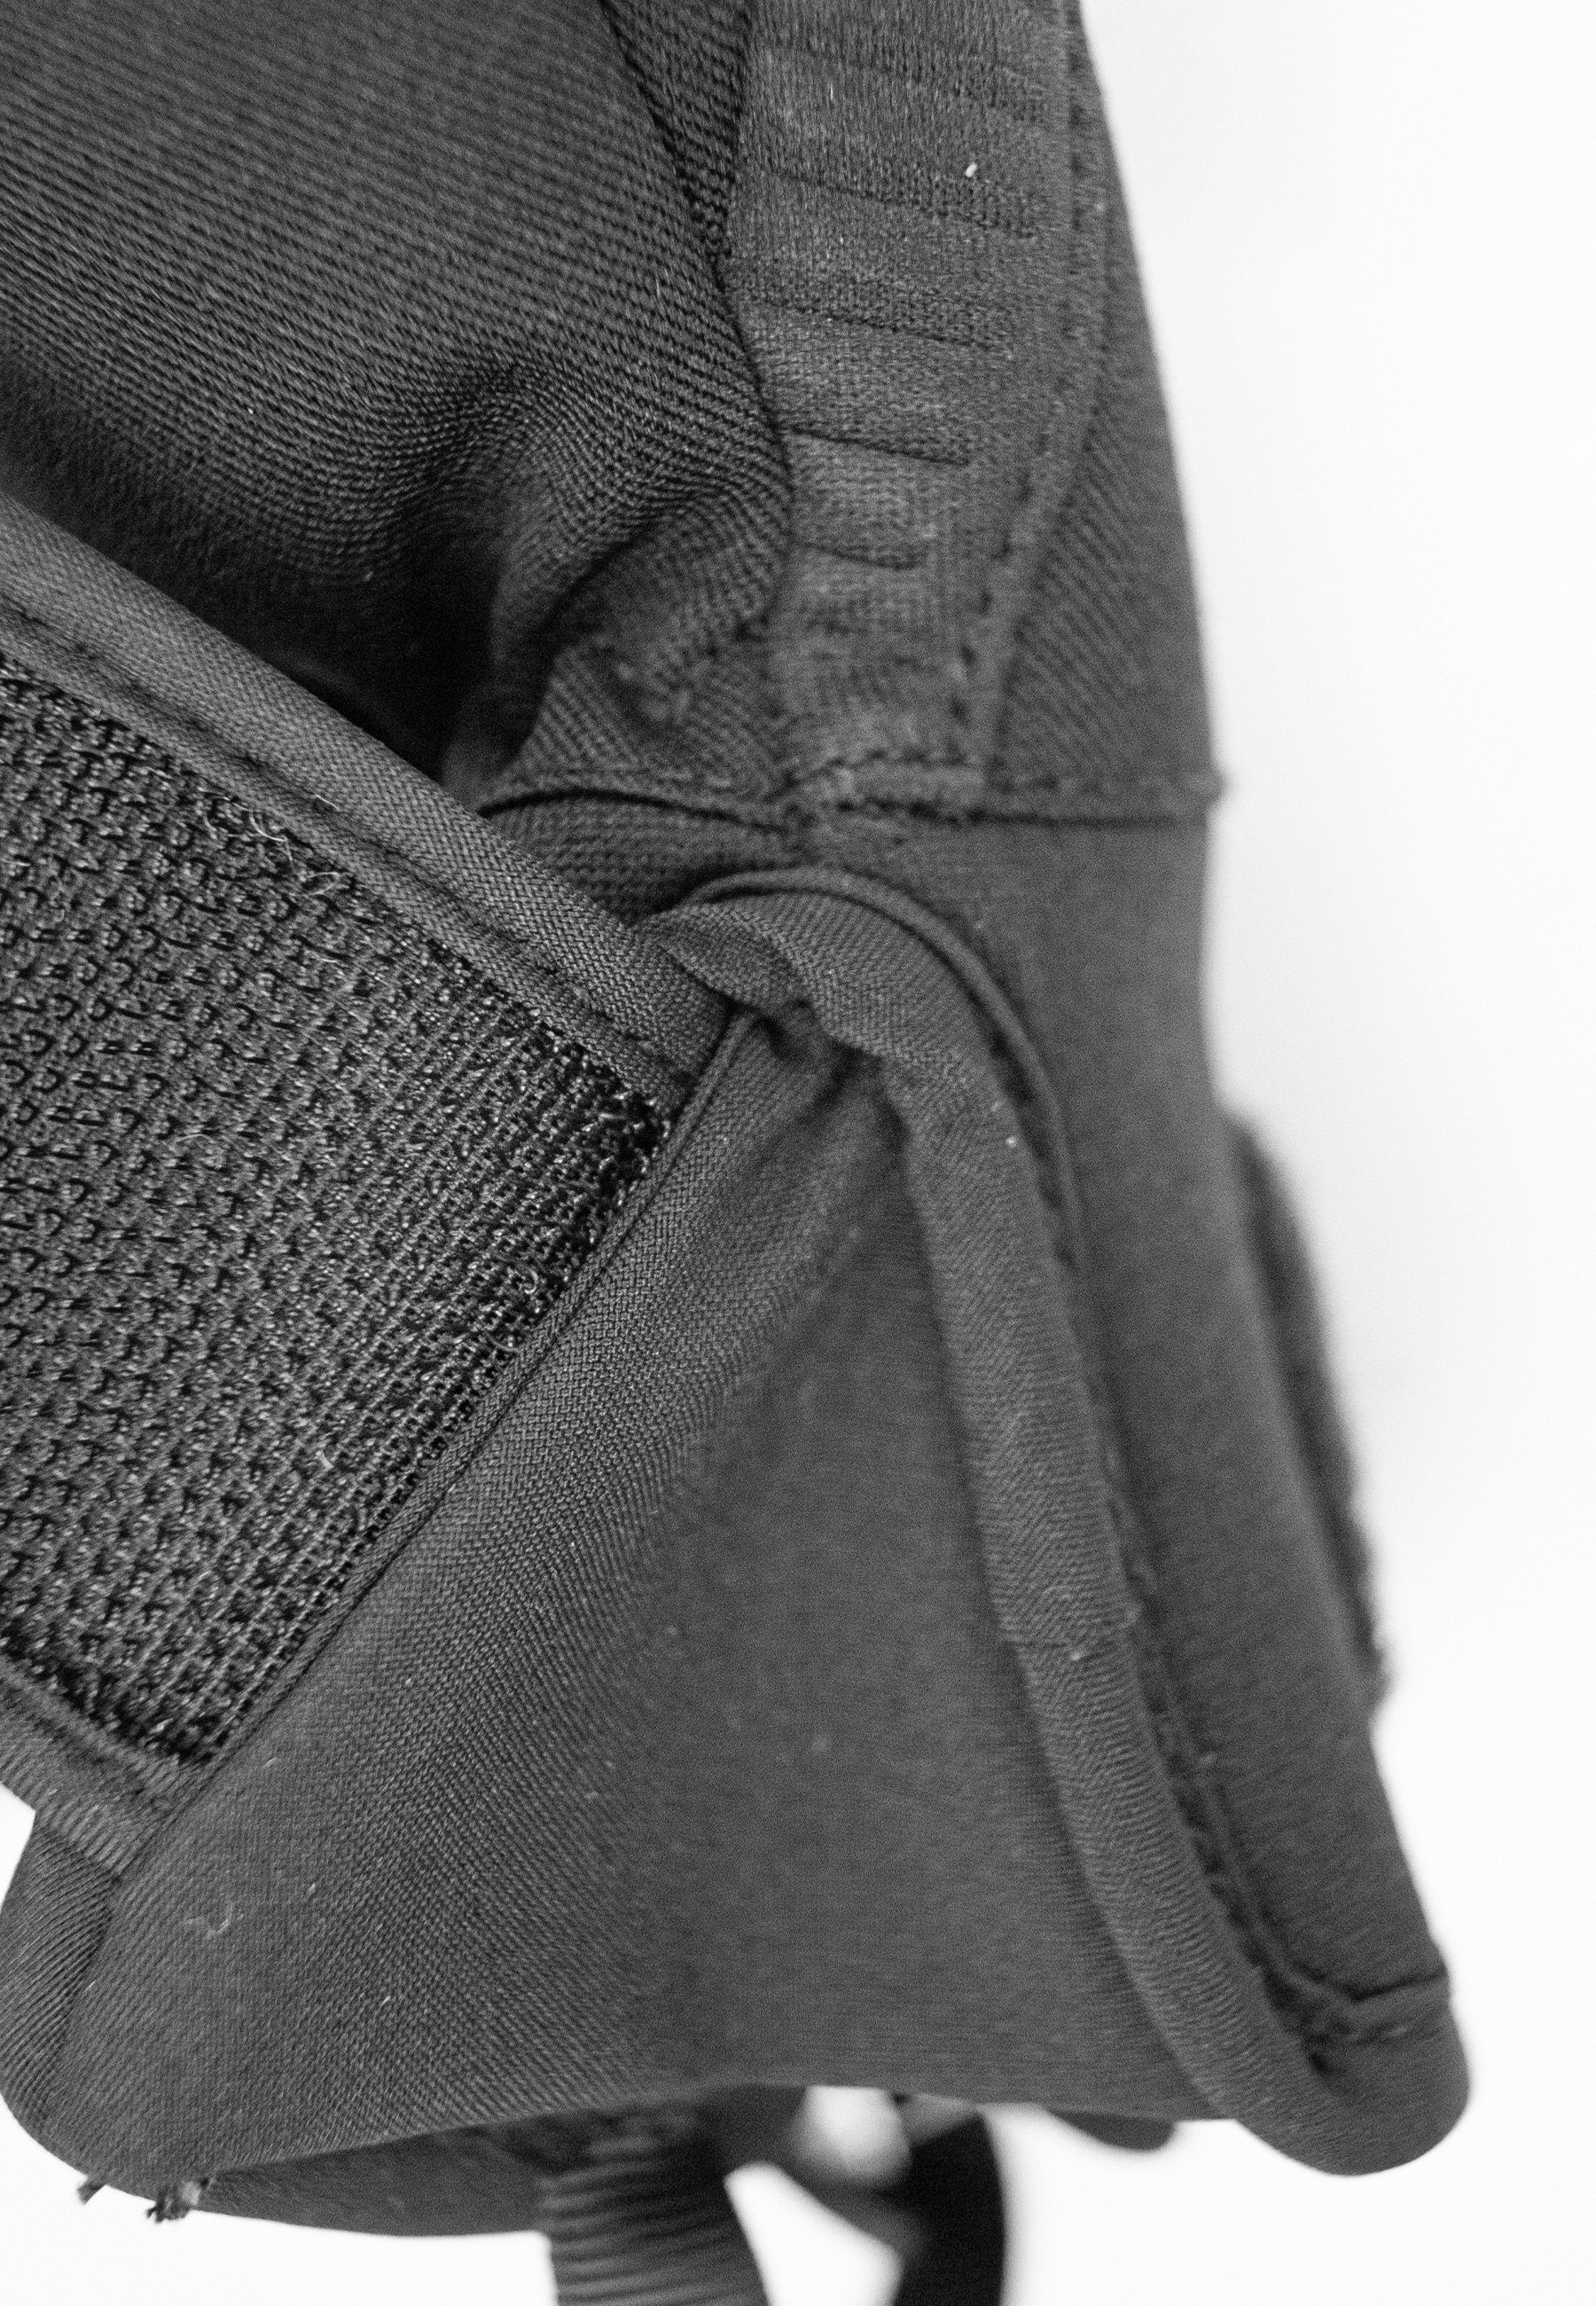 schwarz-schwarz atmungsaktivem Skihandschuhe wasserdichtem Material Reusch Venom und R-TEX® aus XT